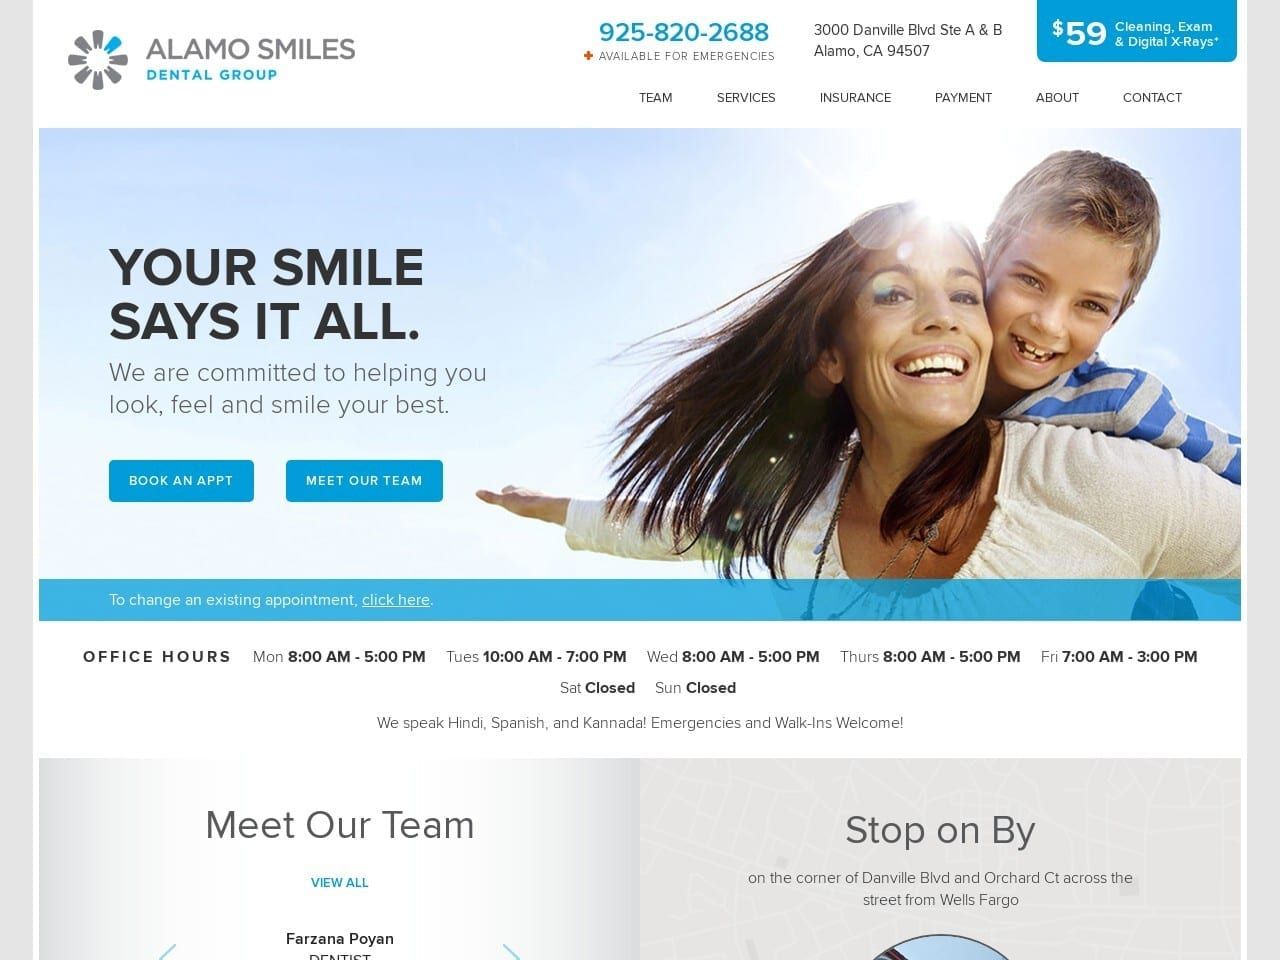 Alamo Smiles Dental Group Website Screenshot from alamosmilesdentalgroup.com